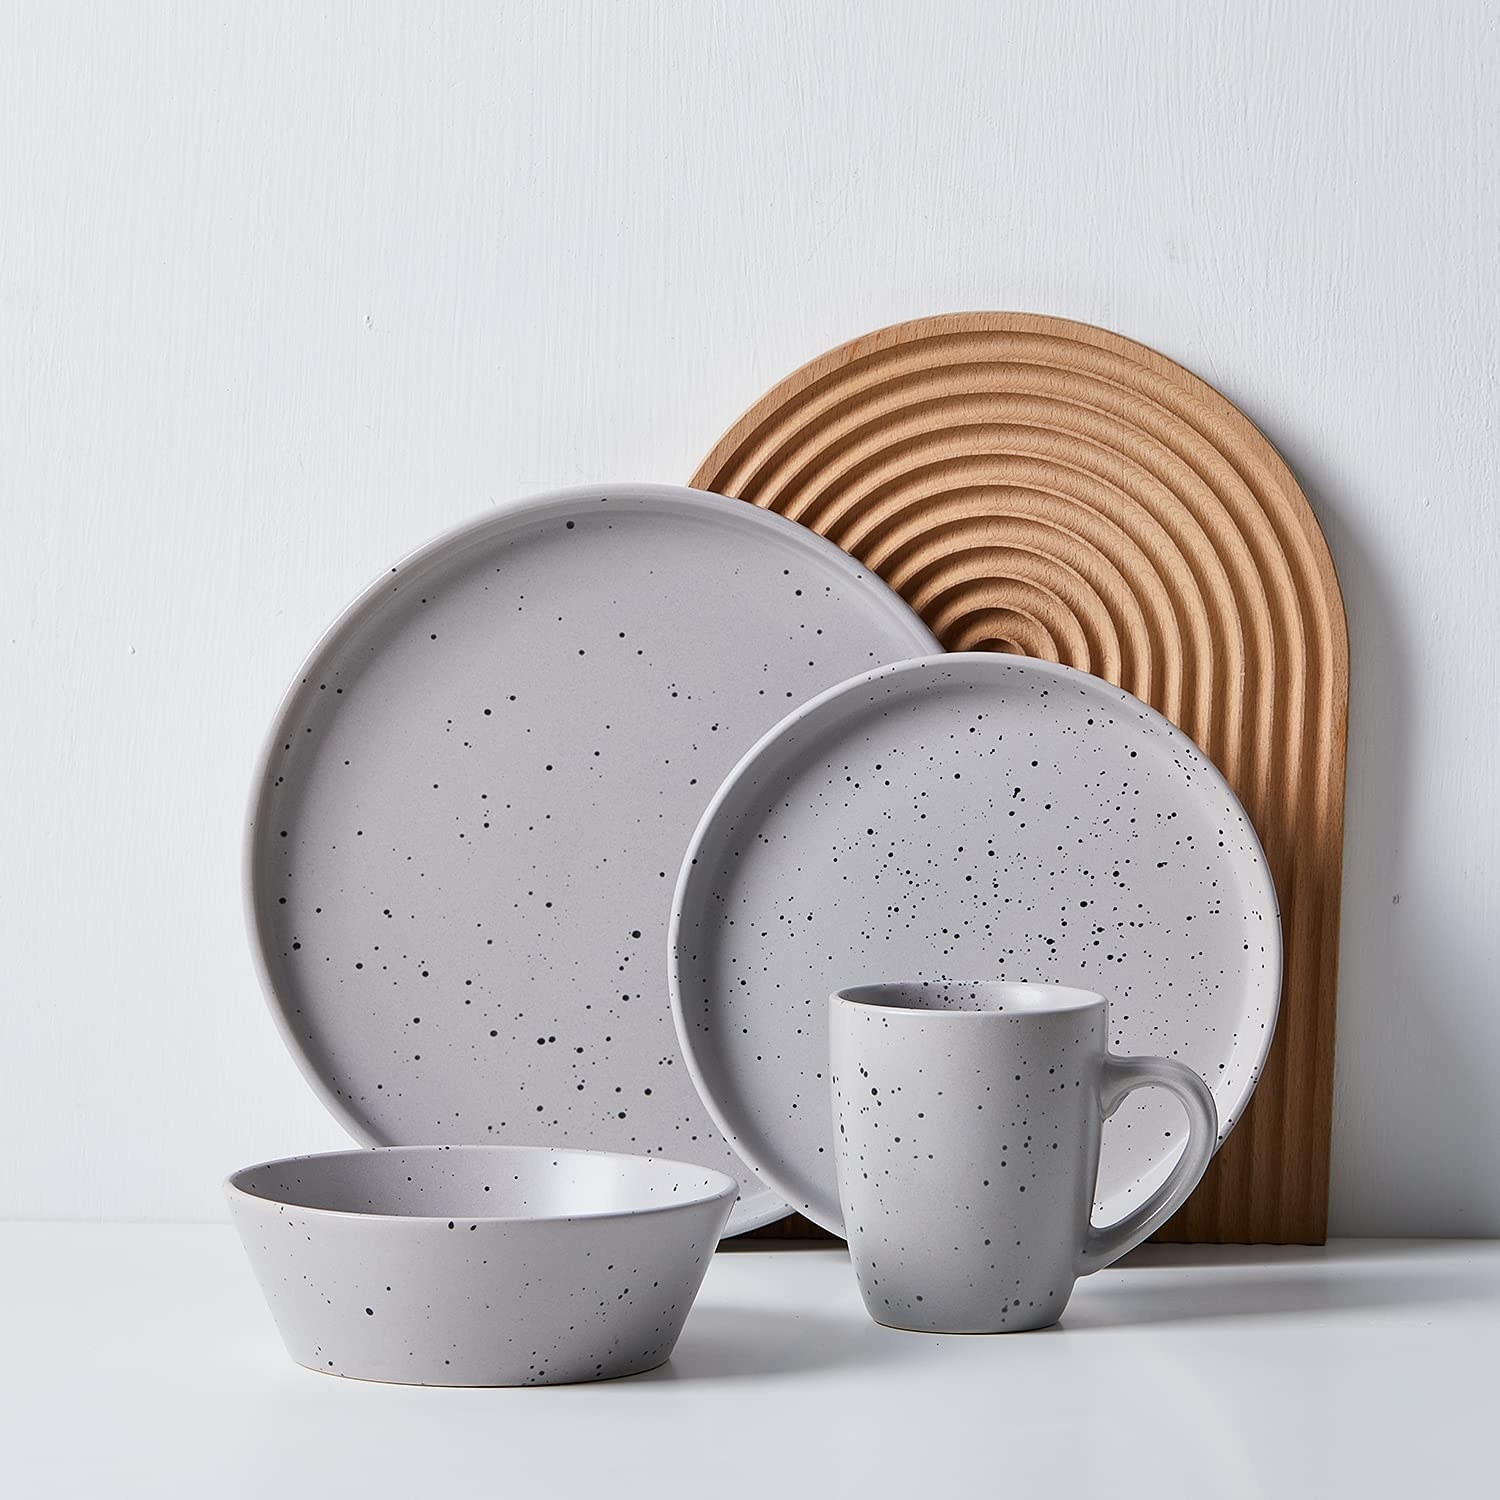 a speckled dinnerware set arranged artistically on a plain countertop